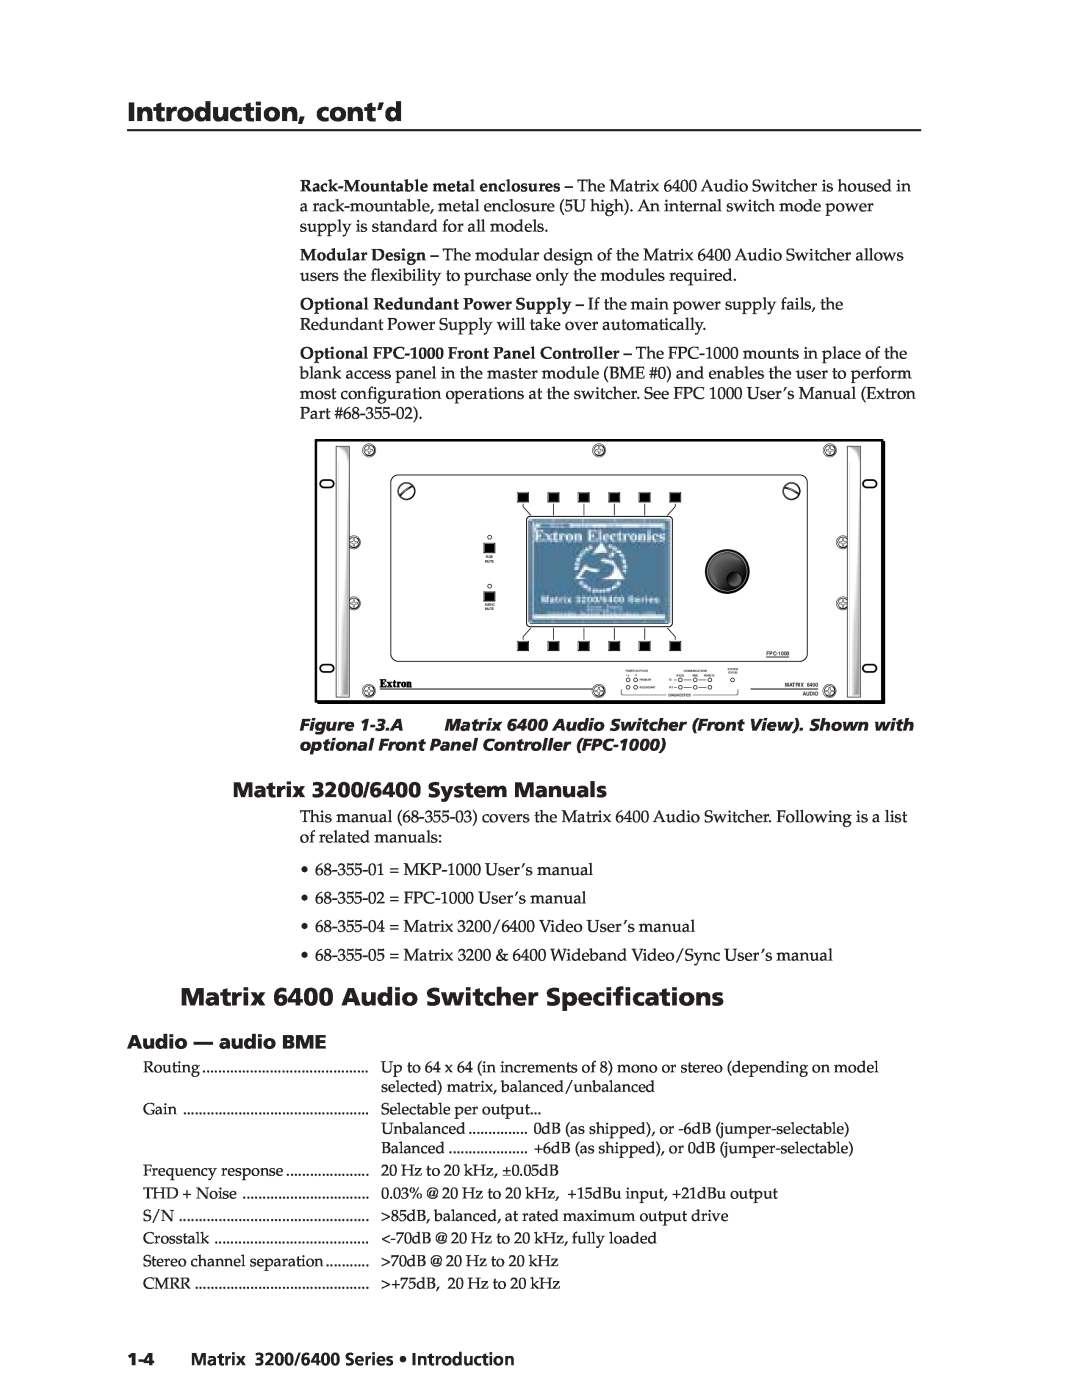 Extron electronic 3200s Introduction, cont’d, Matrix 6400 Audio Switcher Specifications, Matrix 3200/6400 System Manuals 